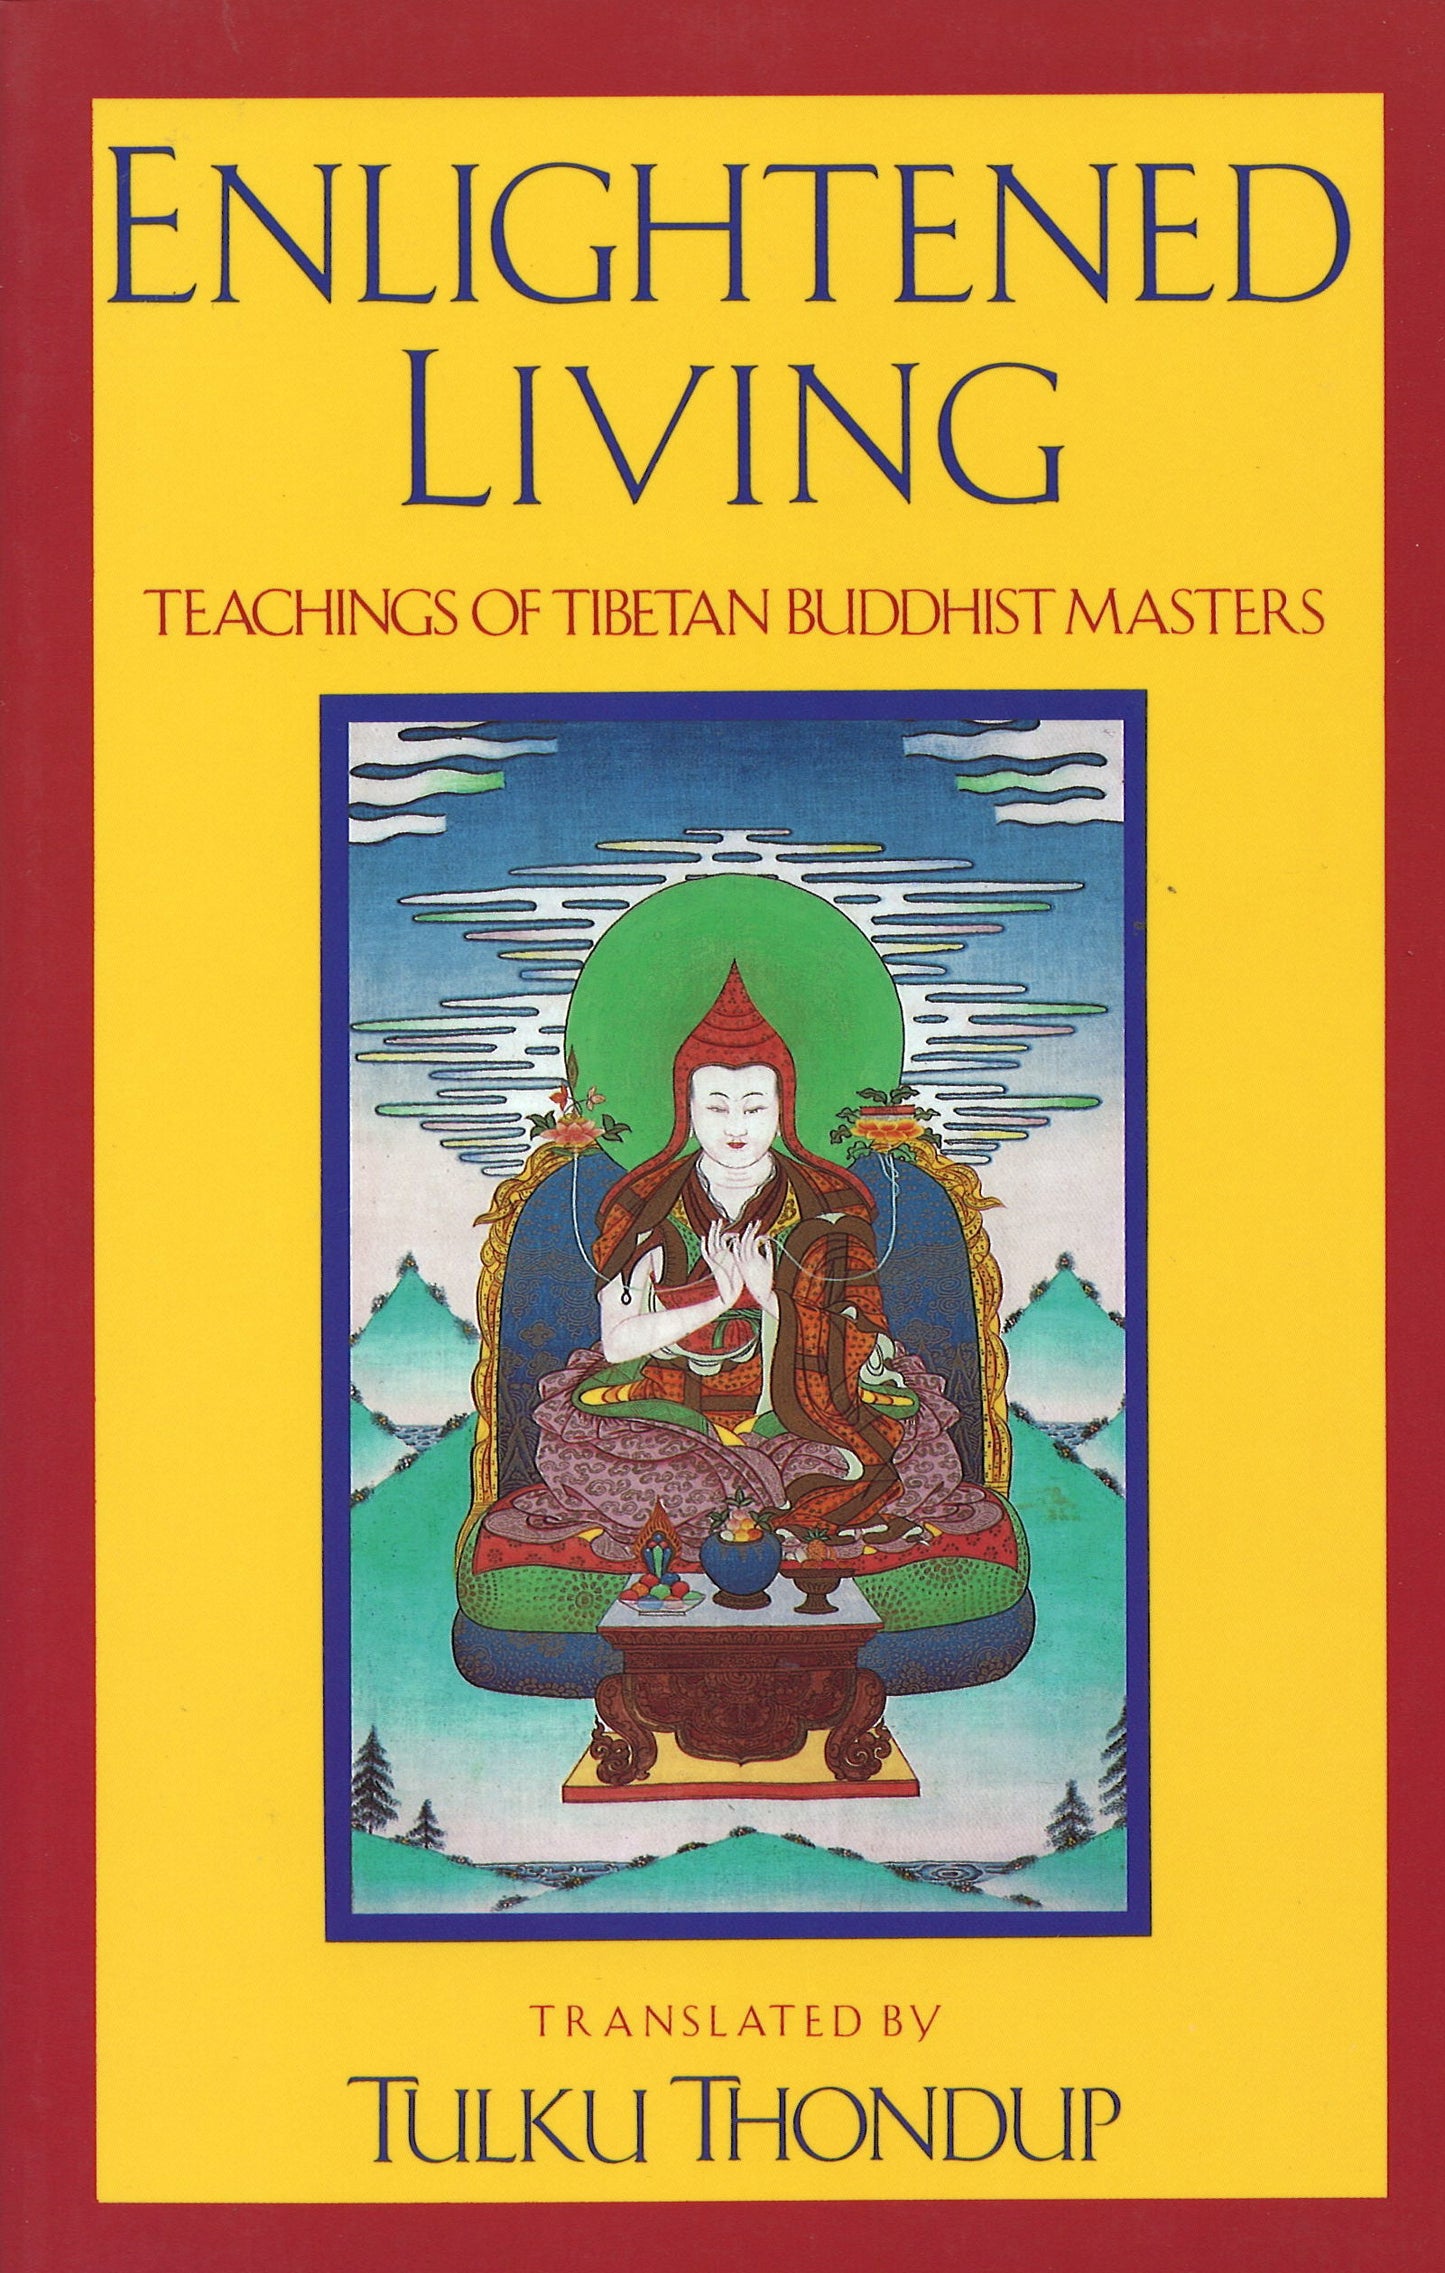 Enlightened Living - Teachings of Tibetan Buddhist Masters